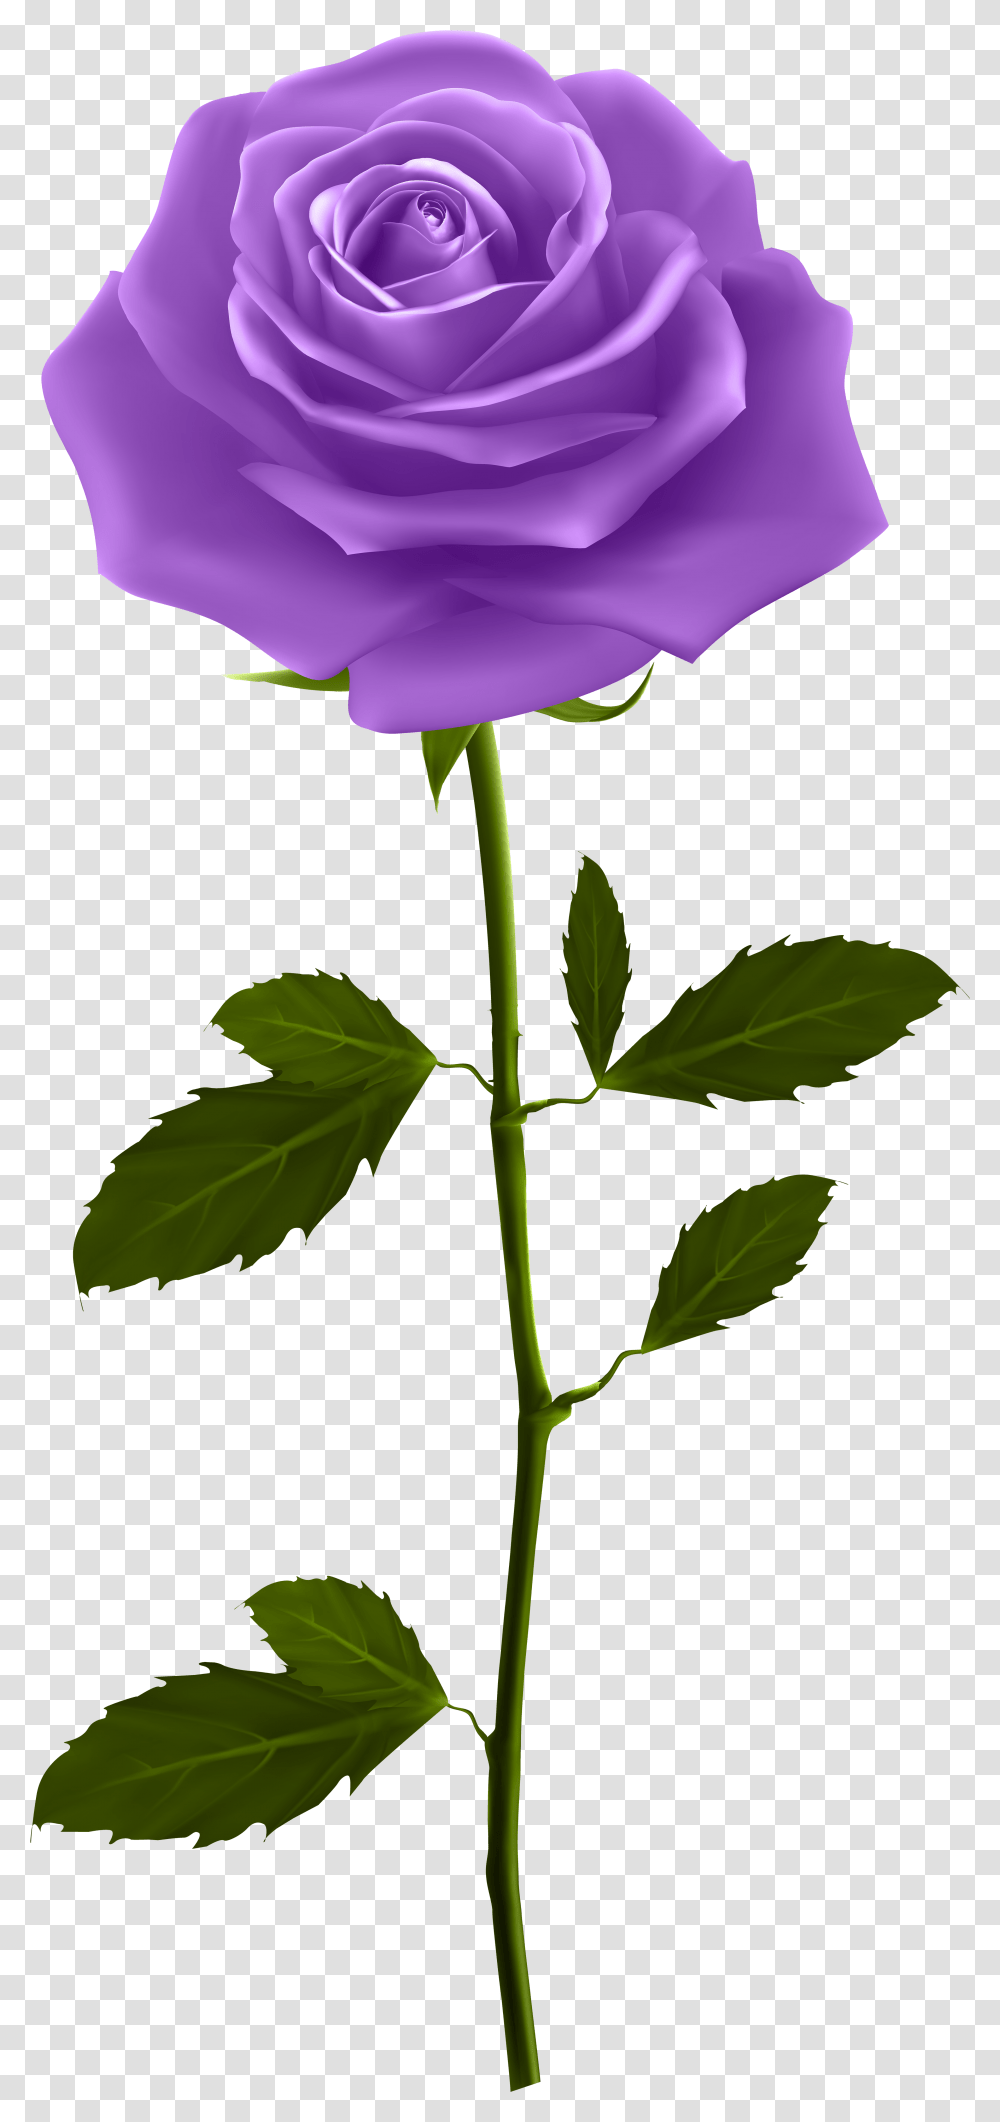 Purple Rose Roses Cartoon With Stem Clip Art Purple Rose With Stem, Plant, Flower, Blossom, Petal Transparent Png